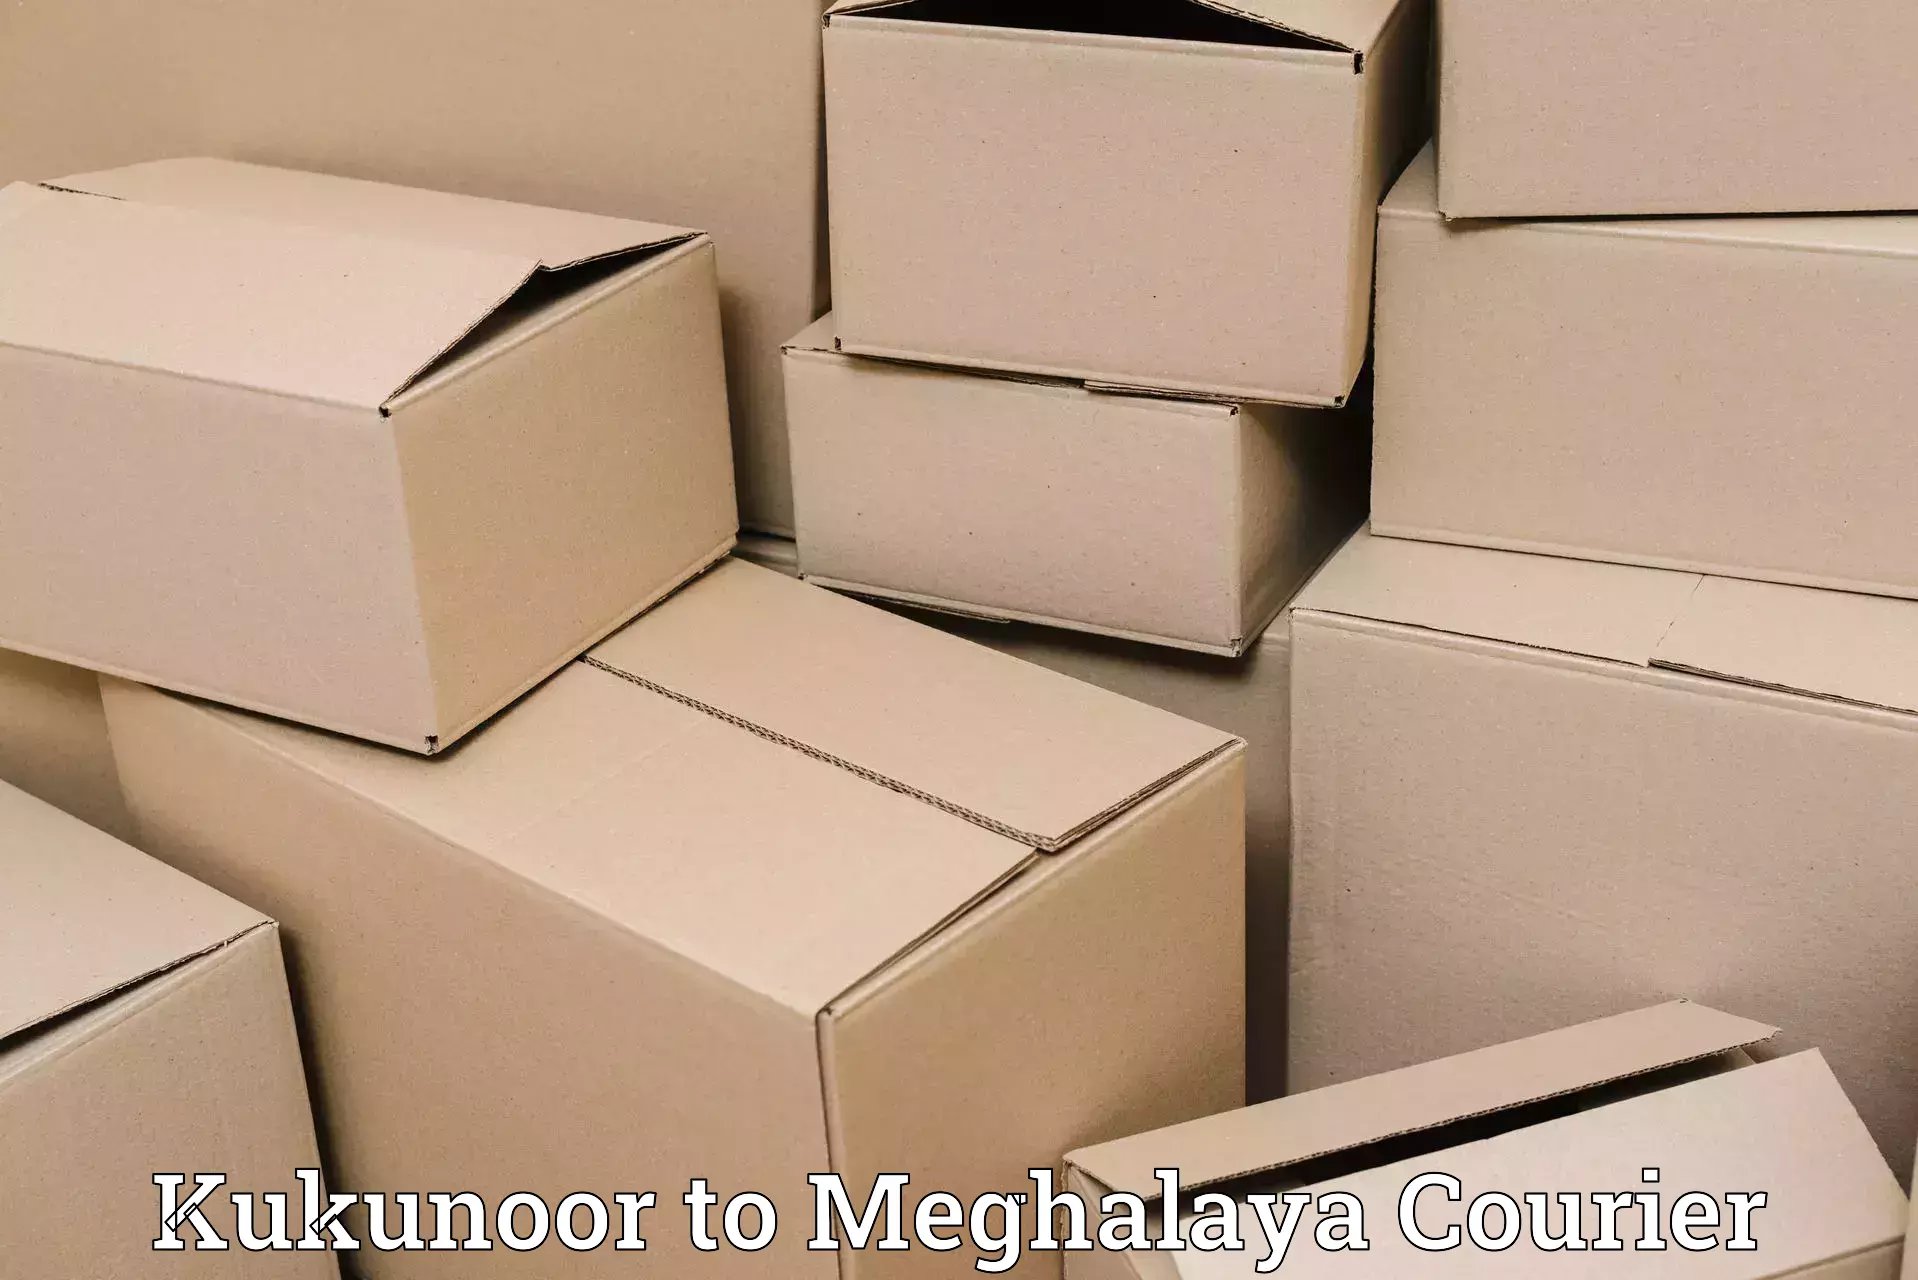 Seamless shipping experience Kukunoor to Tura